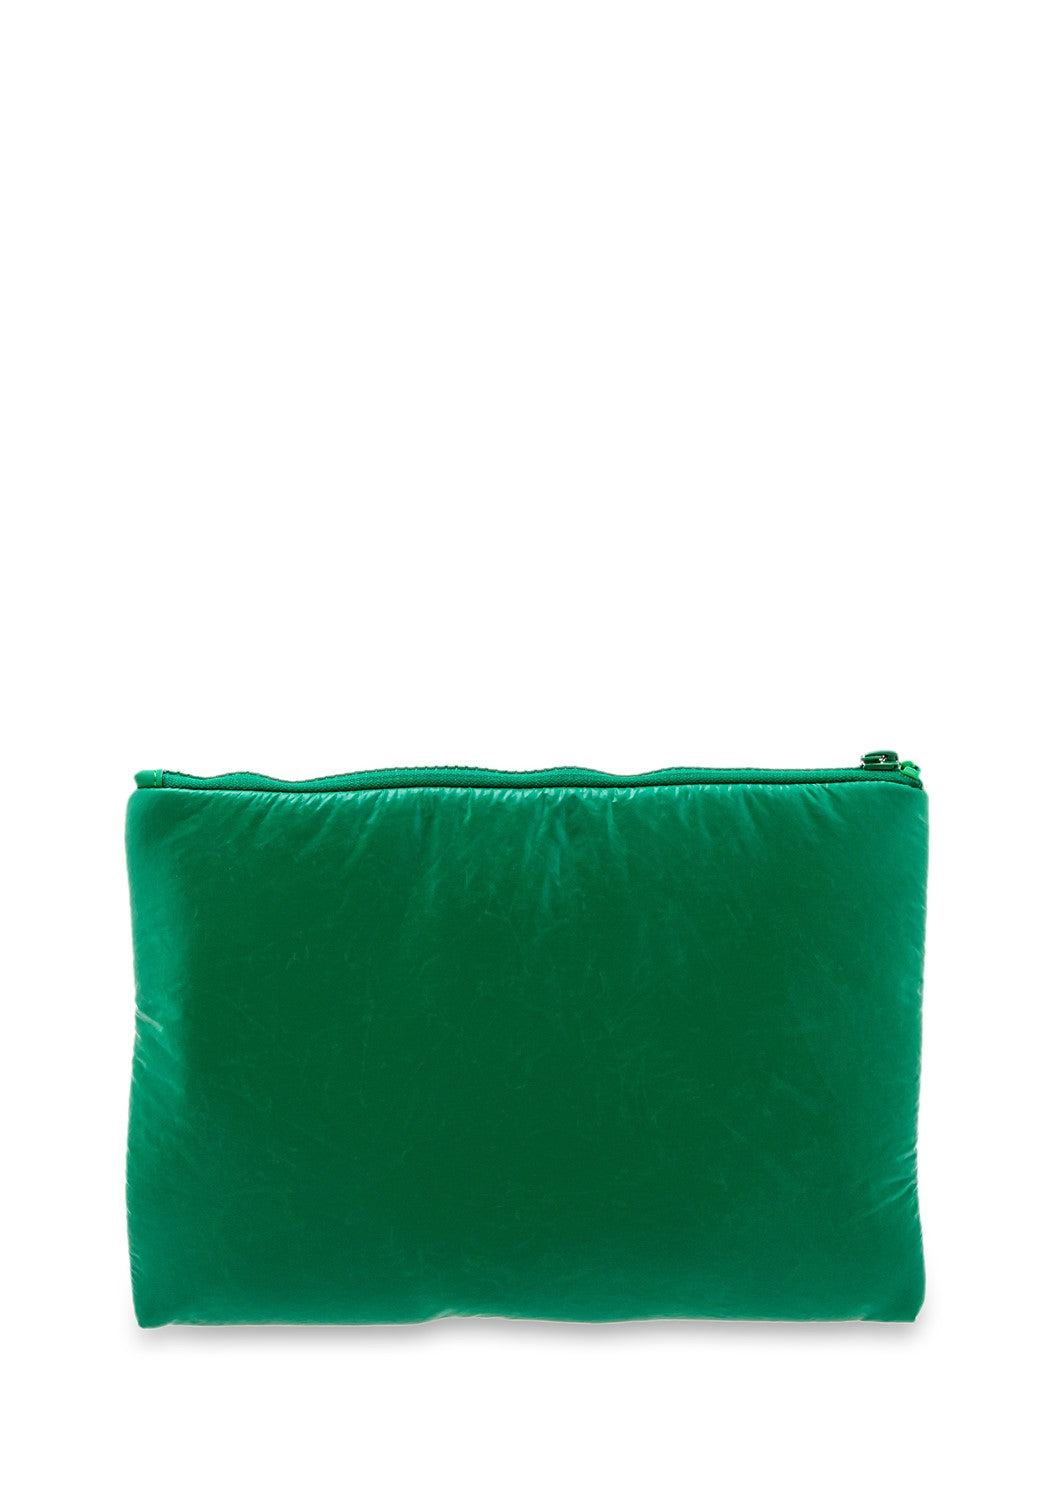 CPH Pouch 2 Big Recycled Nylon dp green | Bildmaterial bereitgestellt von SHOES.PLEASE.